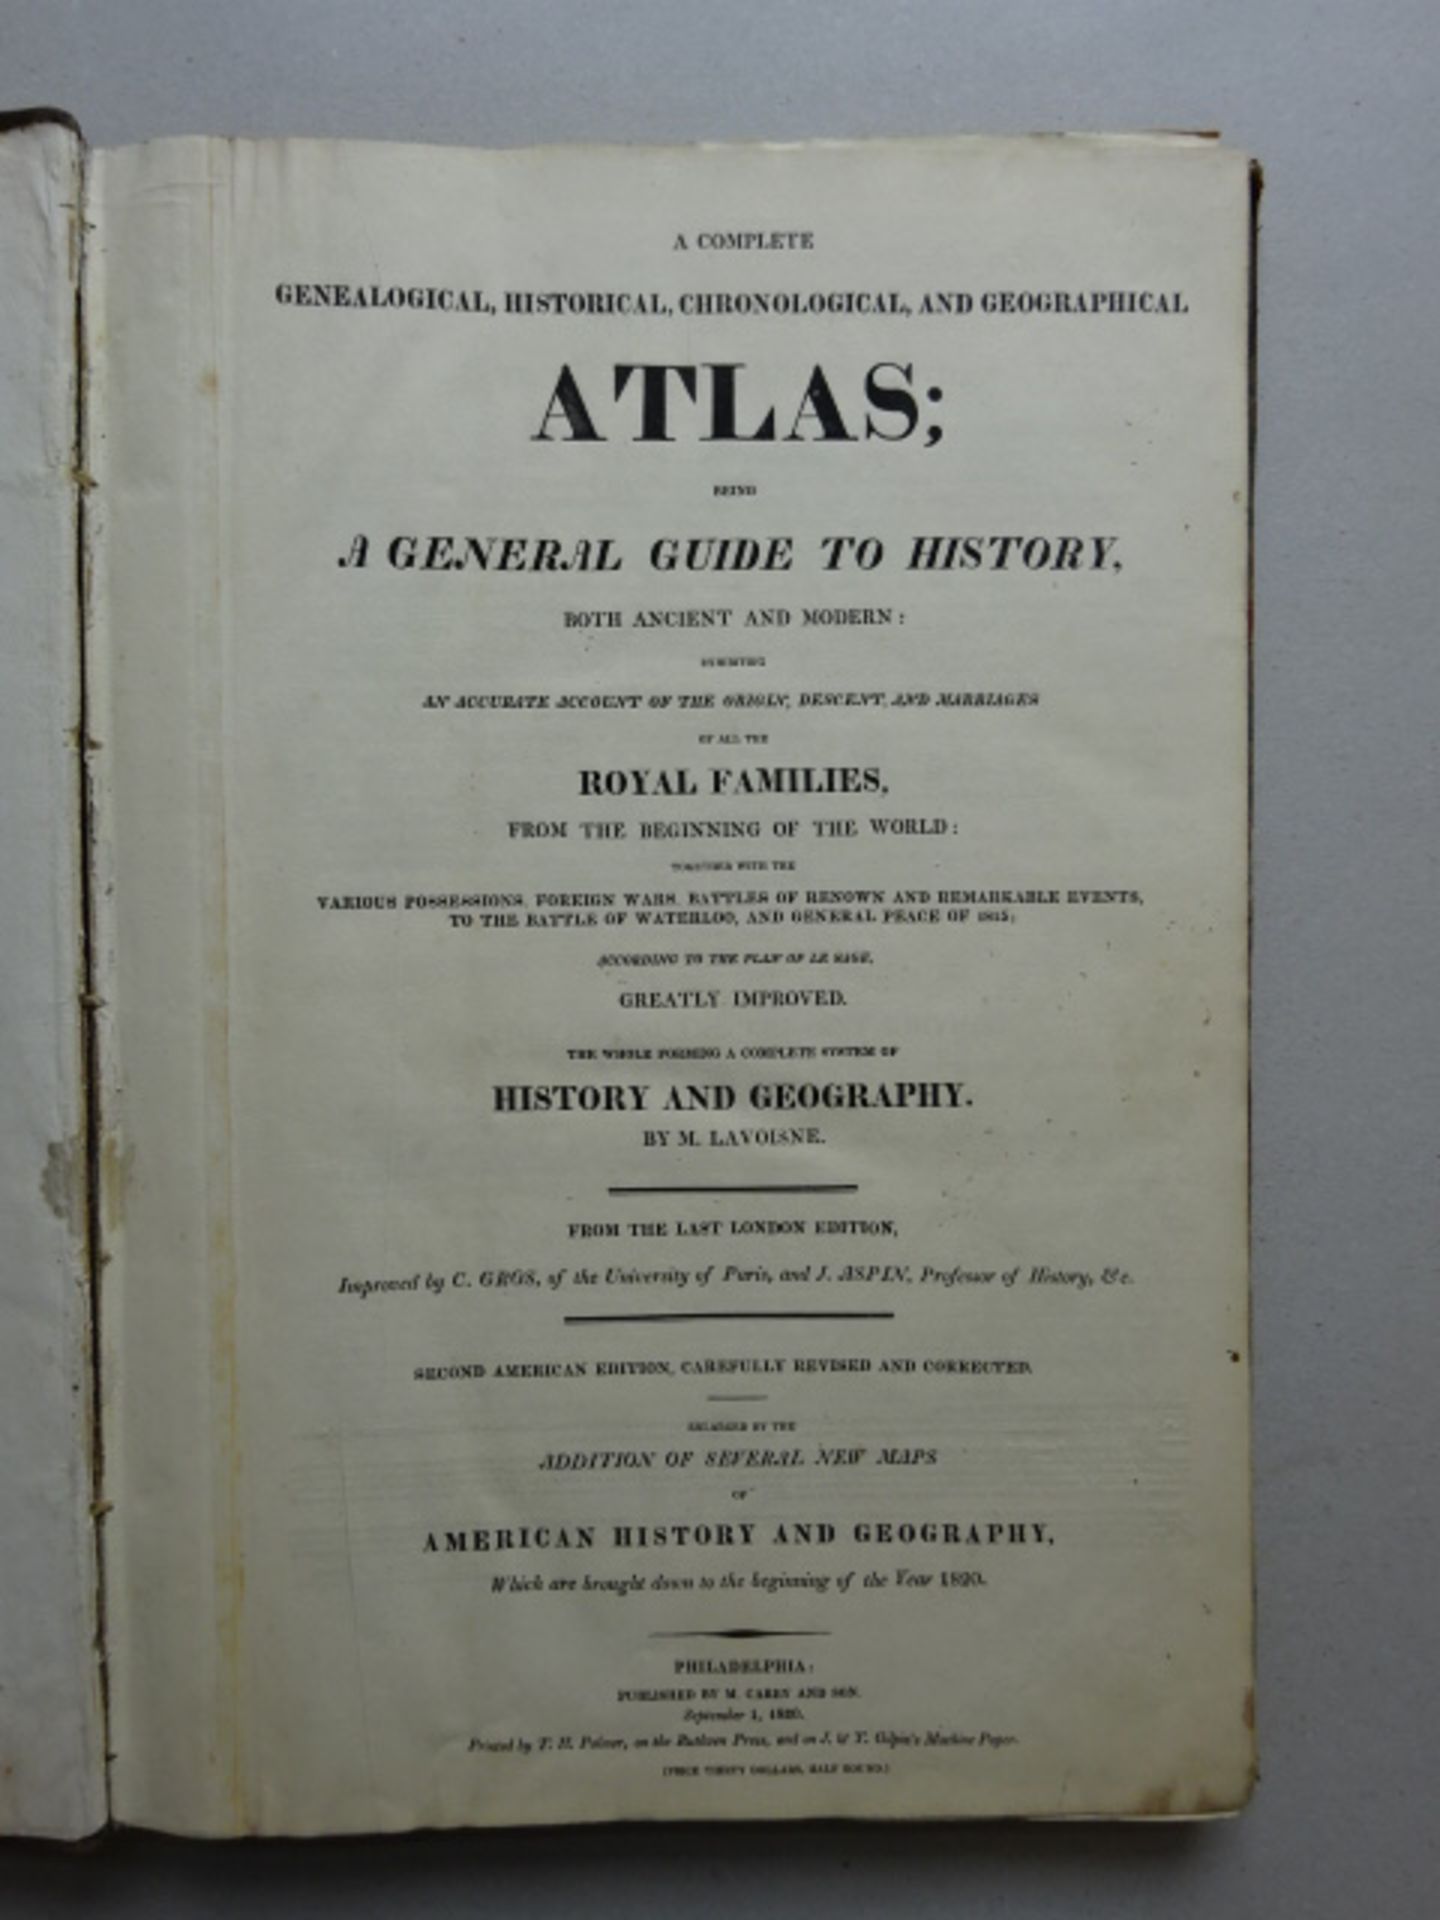 Lavoisne - Atlas, 1820 - Image 2 of 13